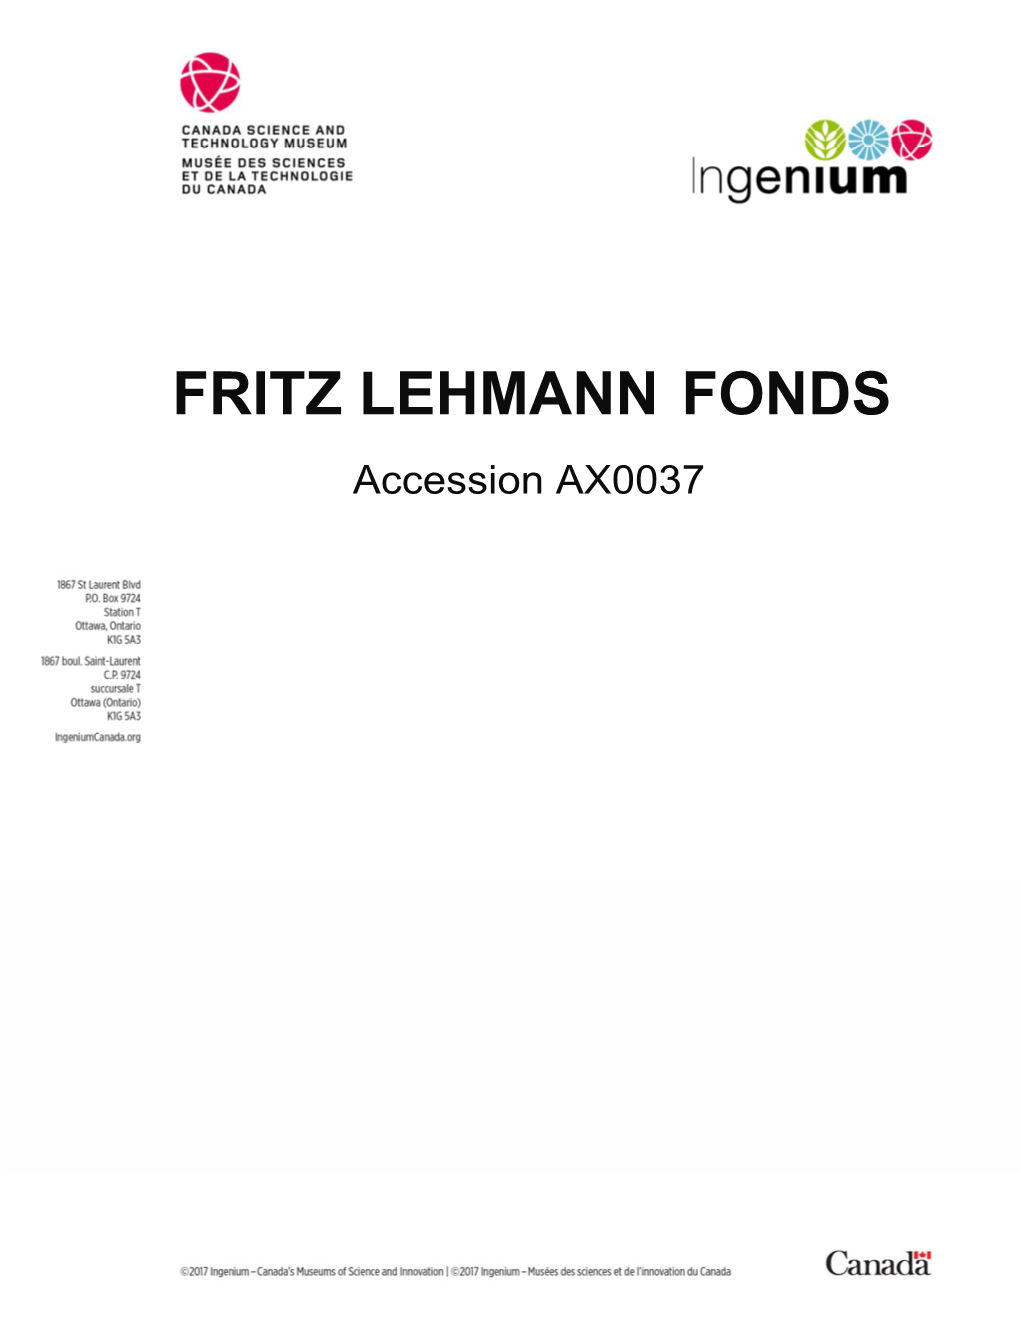 Fritz Lehmann Fonds